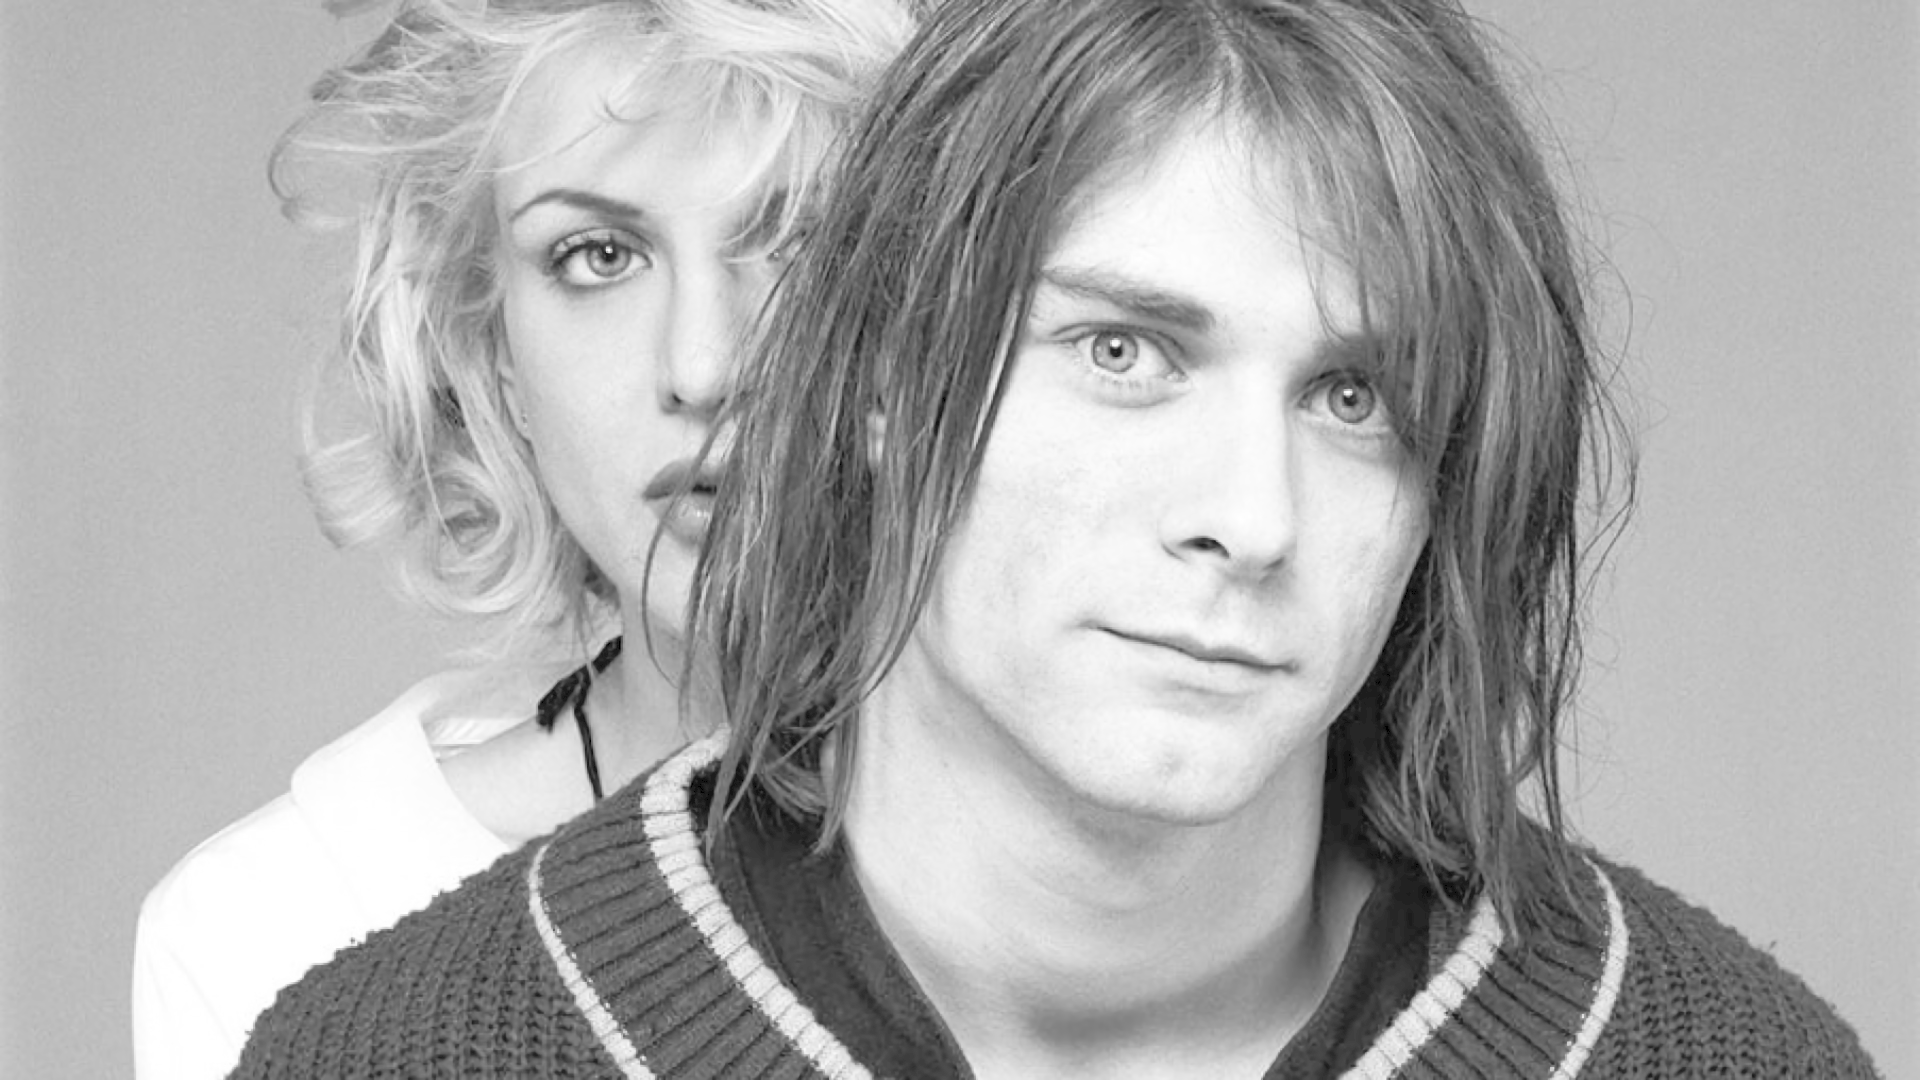 Kurt Cobain and Courtney Love HD Wallpaper. Background Image